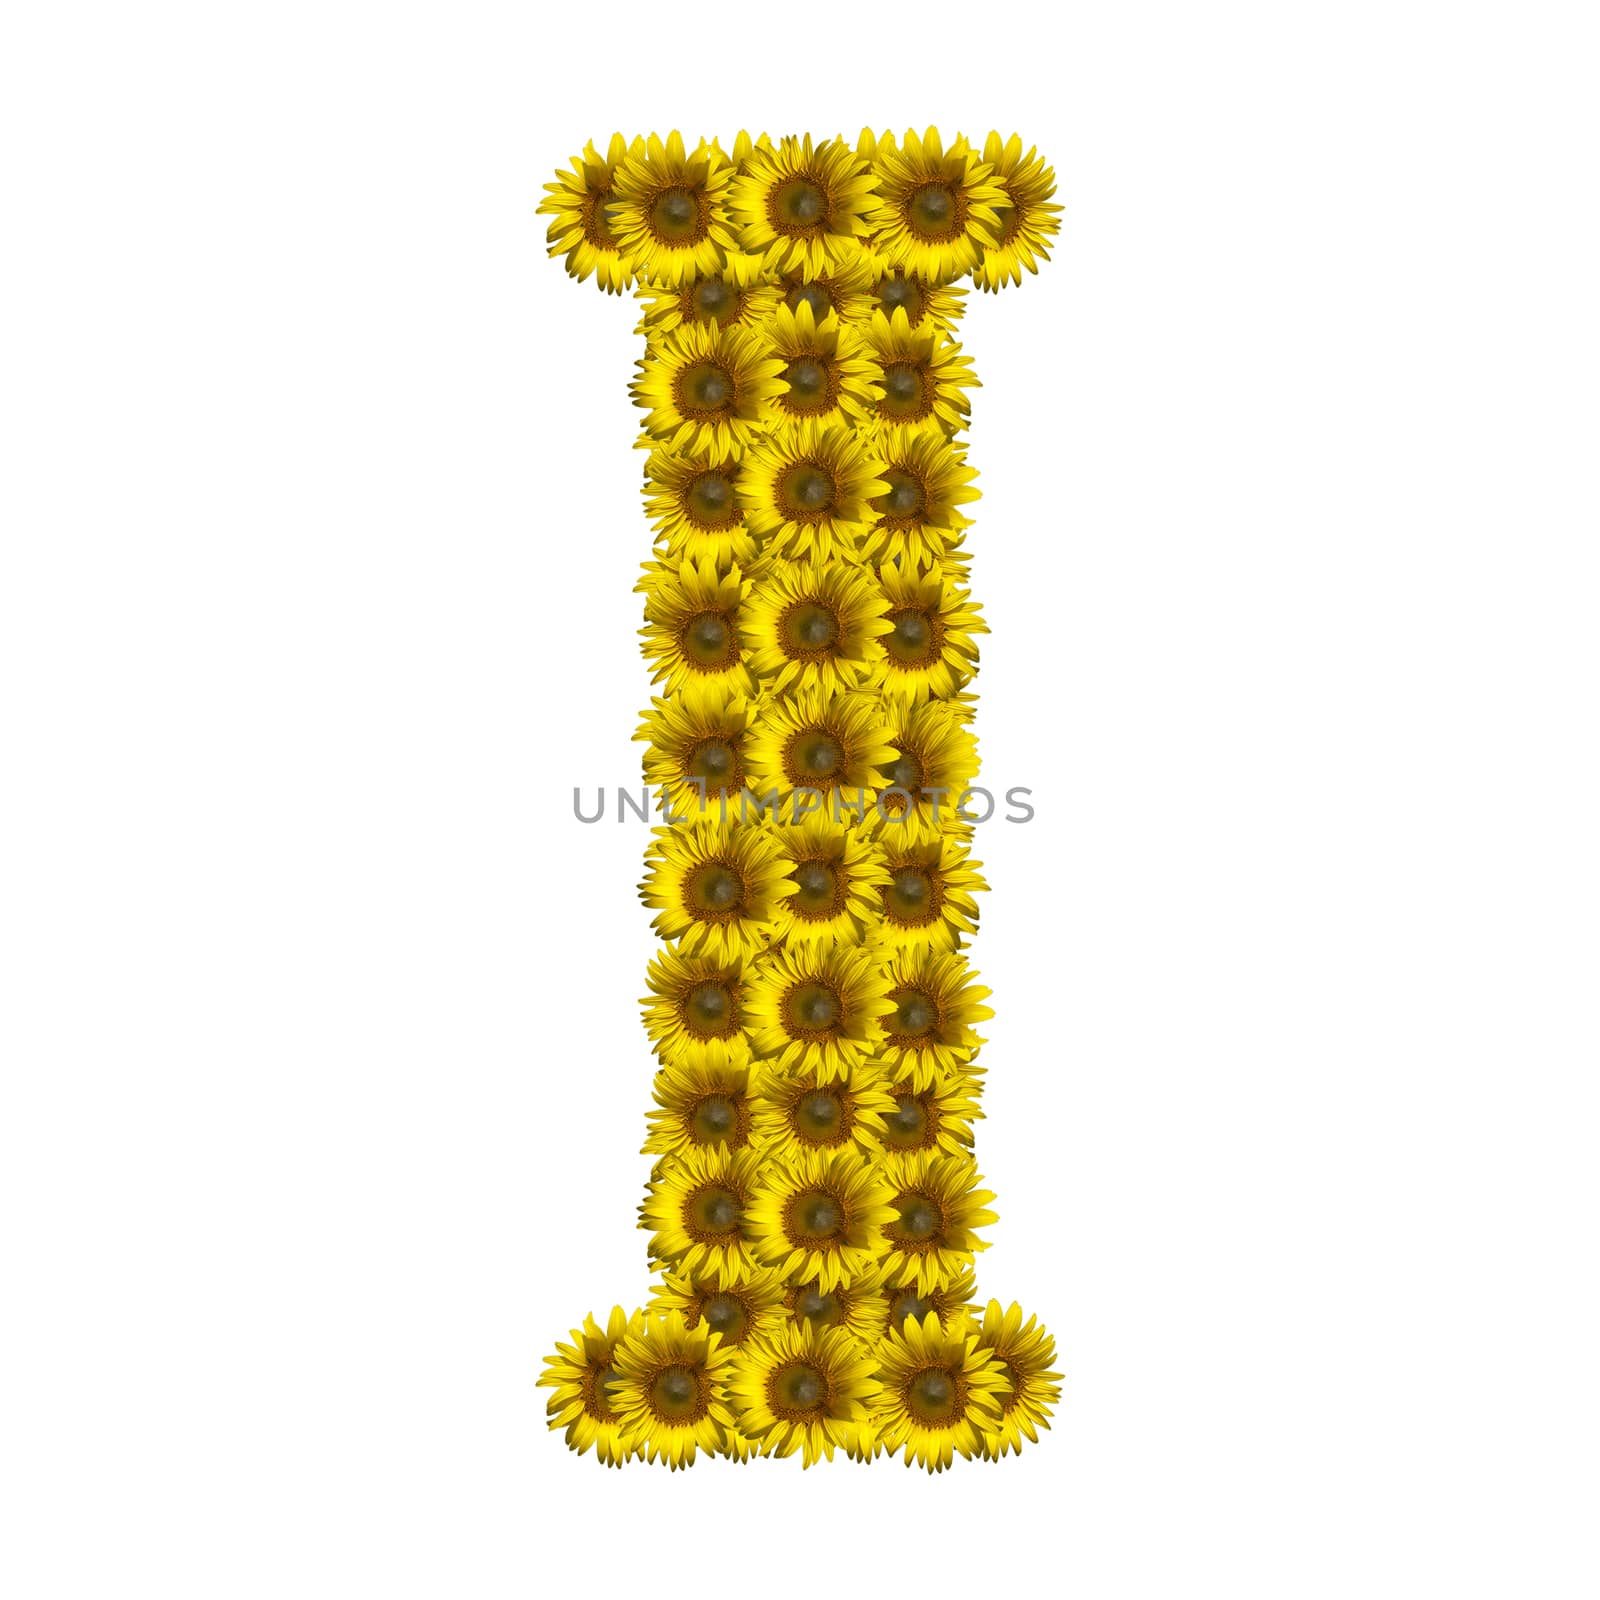 Sunflower alphabet isolated on white background, letter I